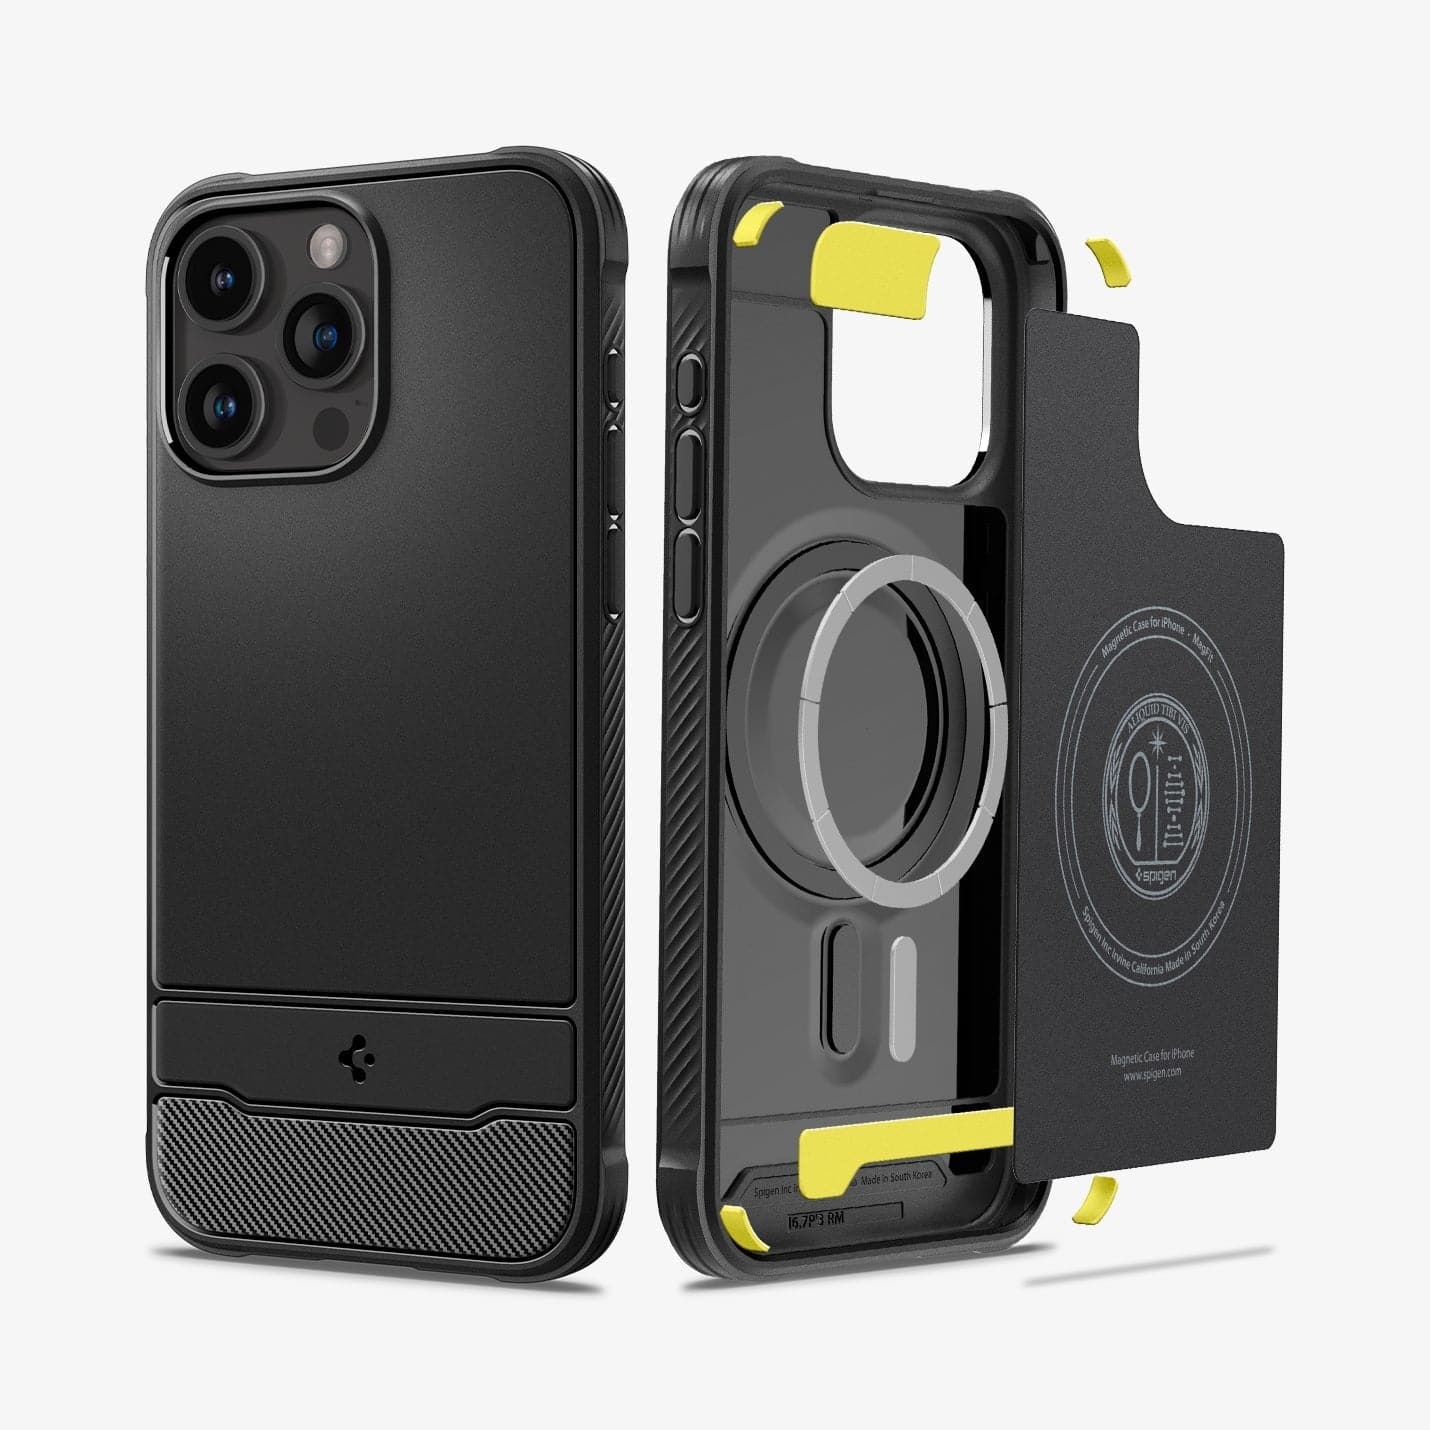 iPhone 15 Series Case Rugged Armor (MagFit) -  Official Site –  Spigen Inc